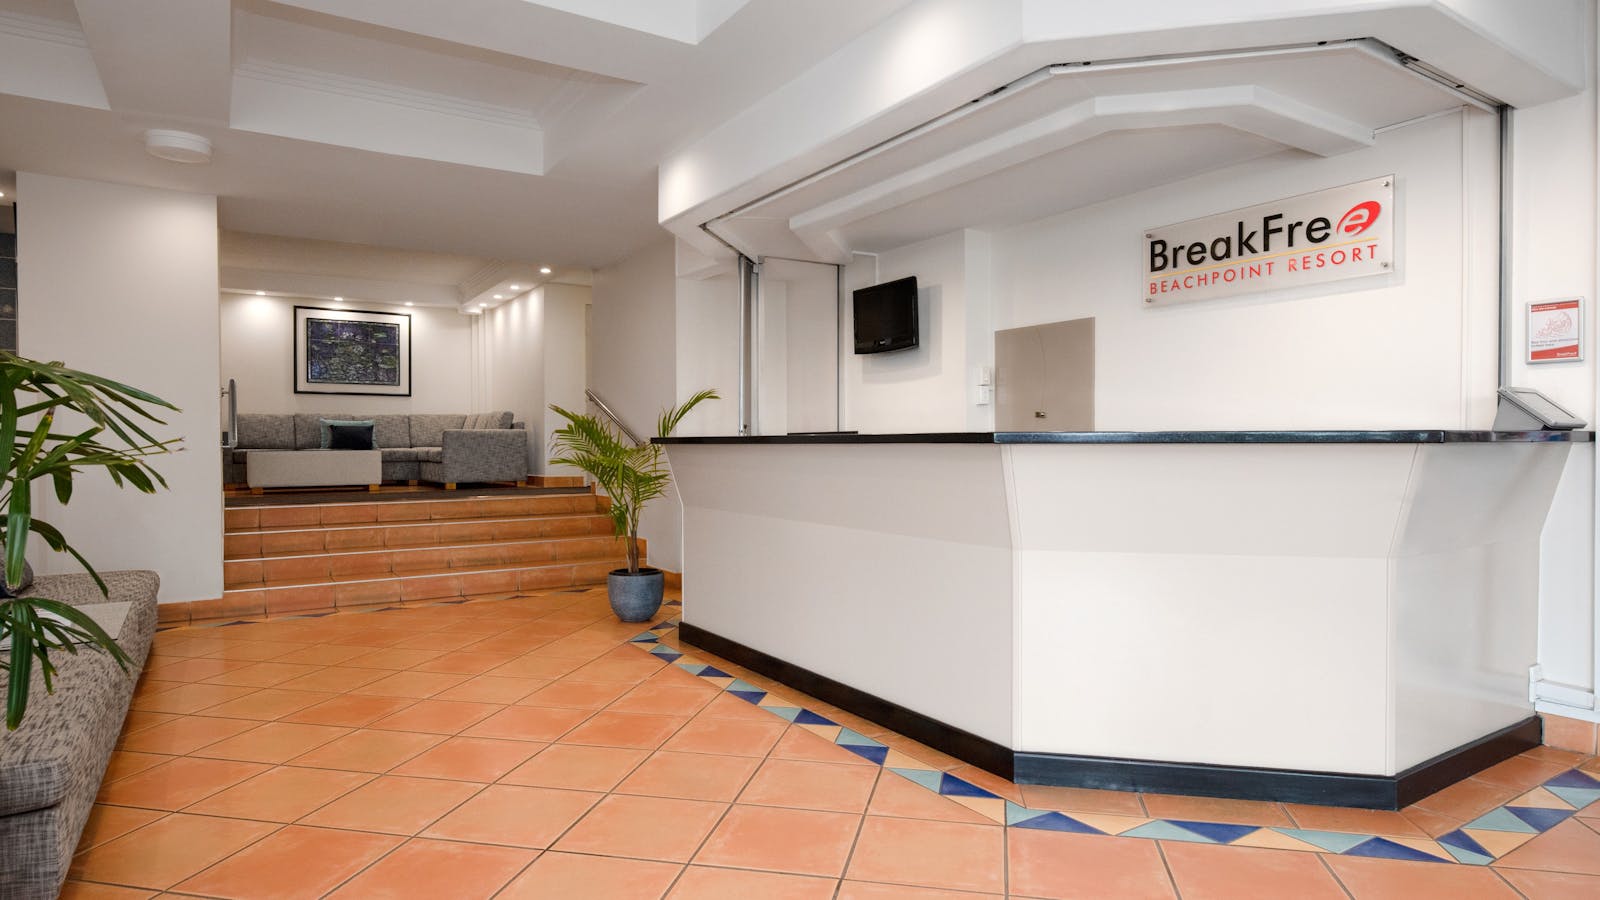 BreakFree Beachpoint - Lobby